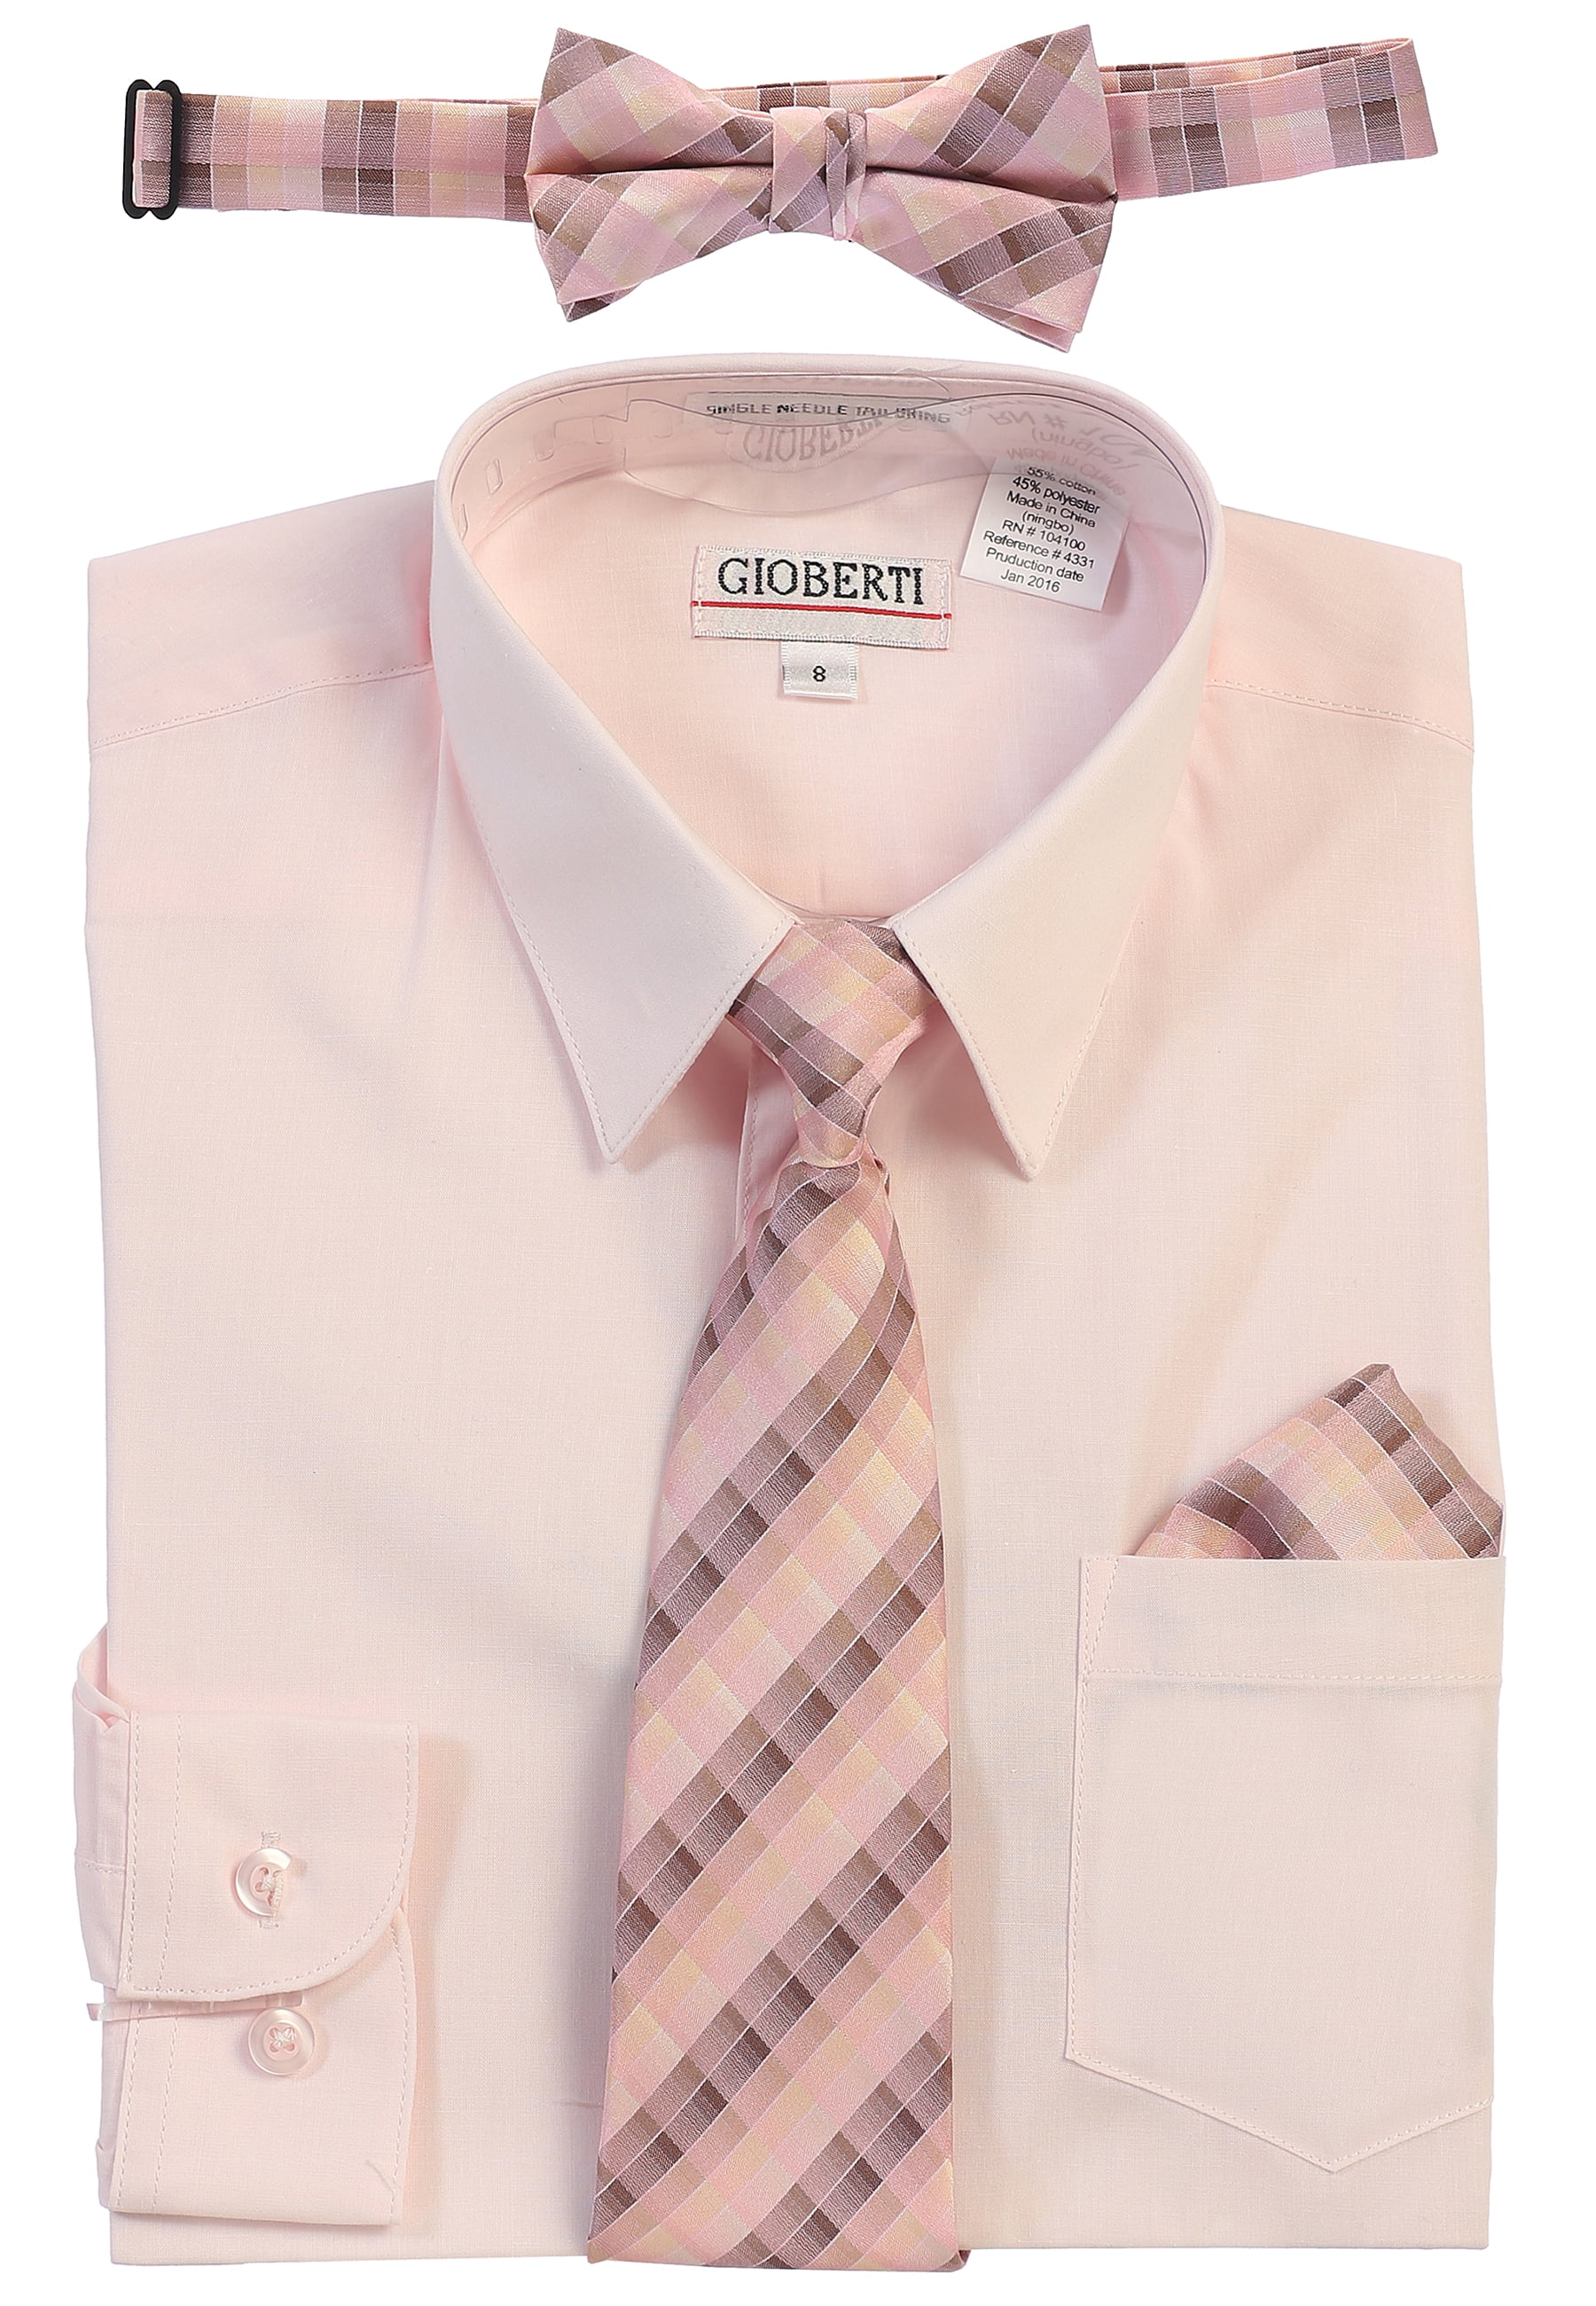 Bow Tie and Hanky Gioberti Boys Long Sleeve Dress Shirt Plaid Tie 